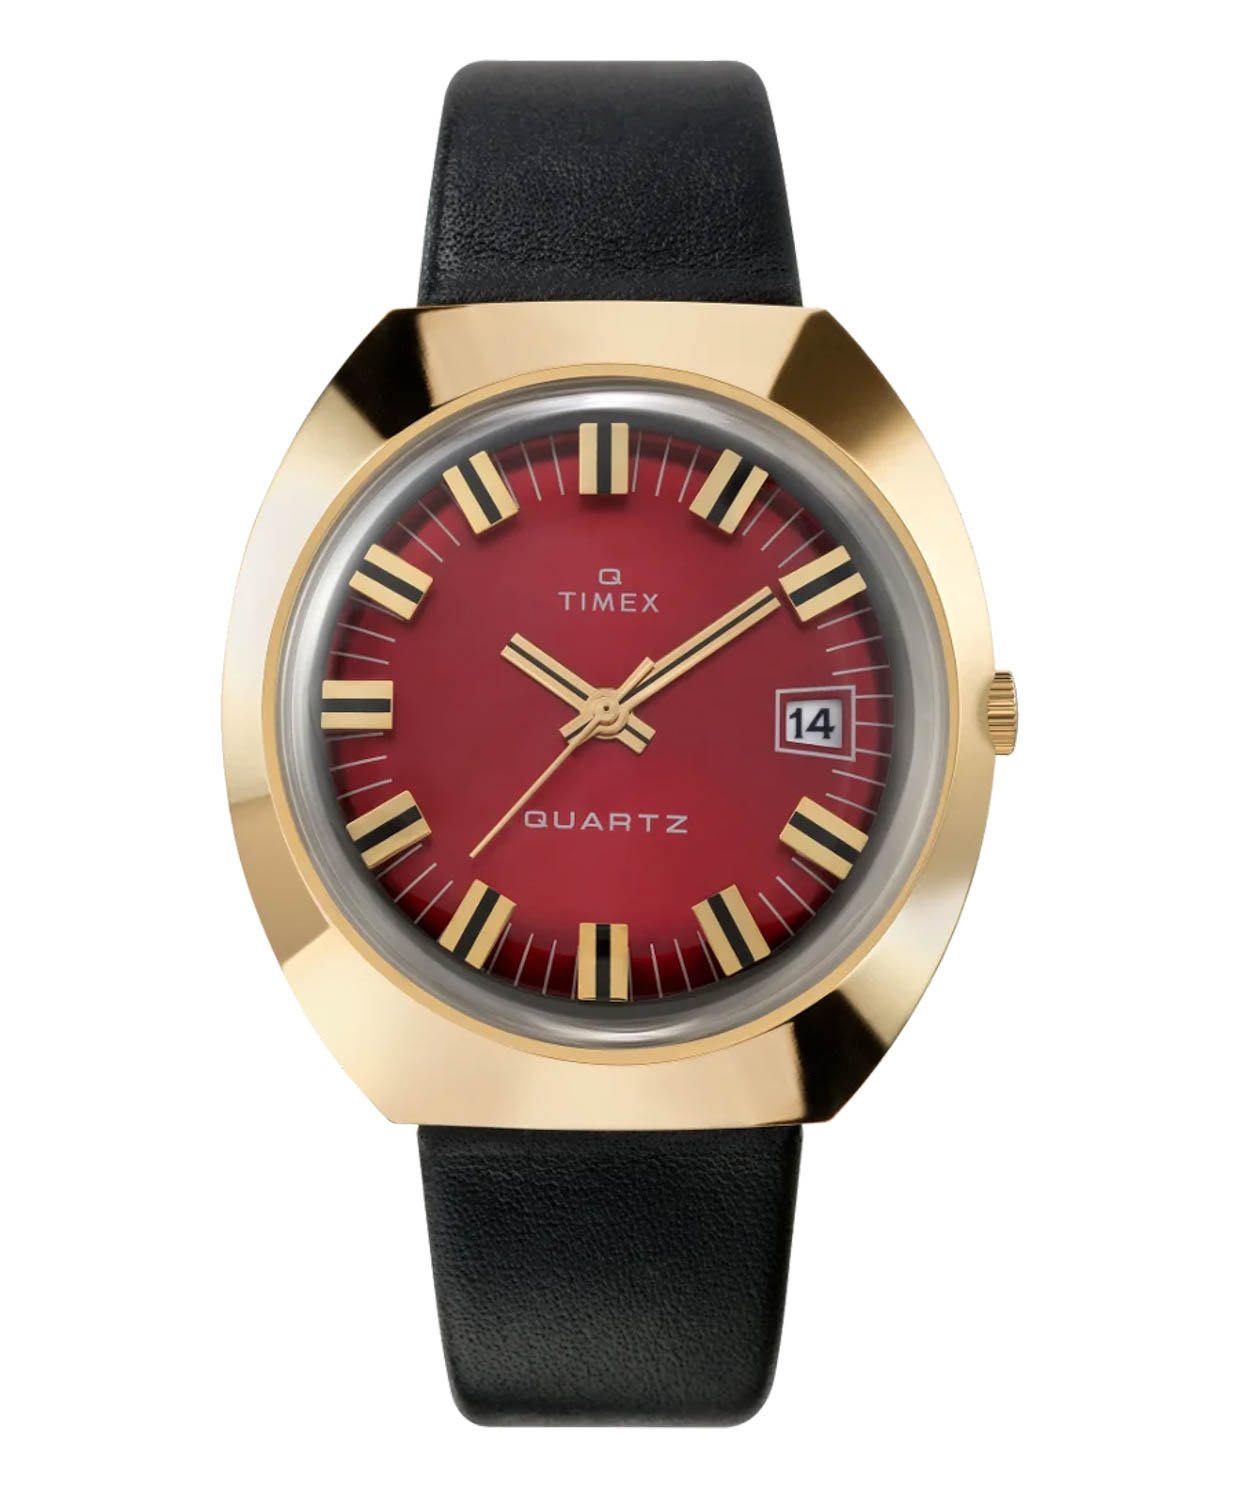 Q Timex 1972 Reissue Goldtone Watch